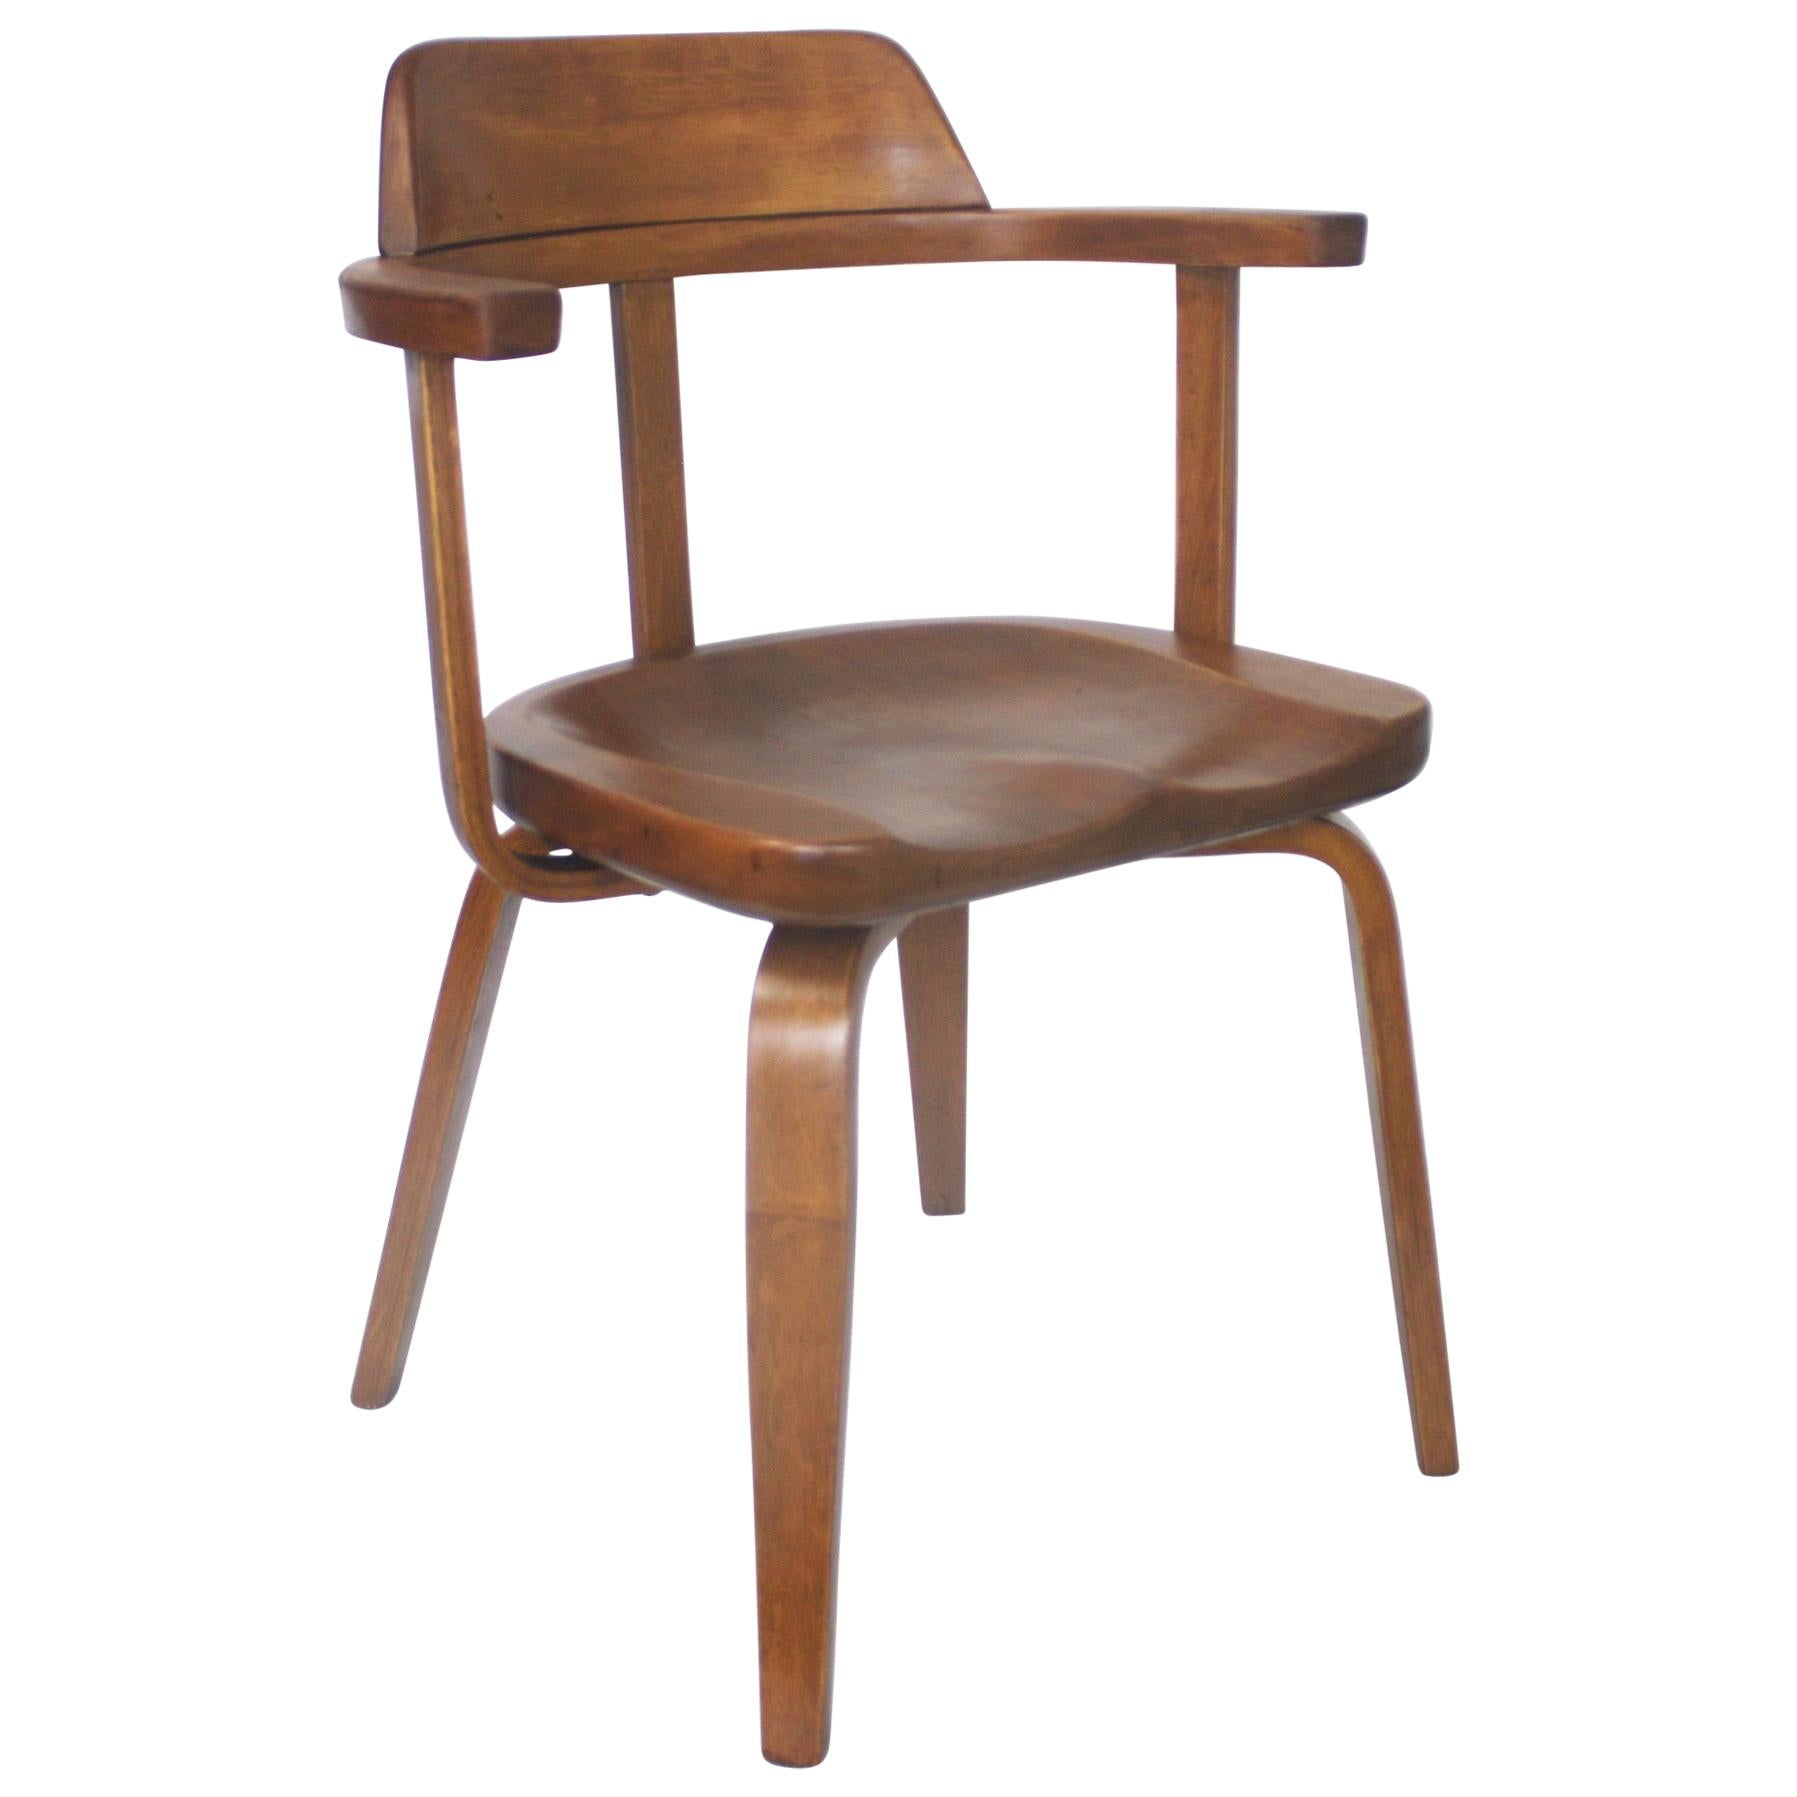 Rare Mid-Century Modern W199 Chair Designed by Walter Gropius for Thonet Bauhaus